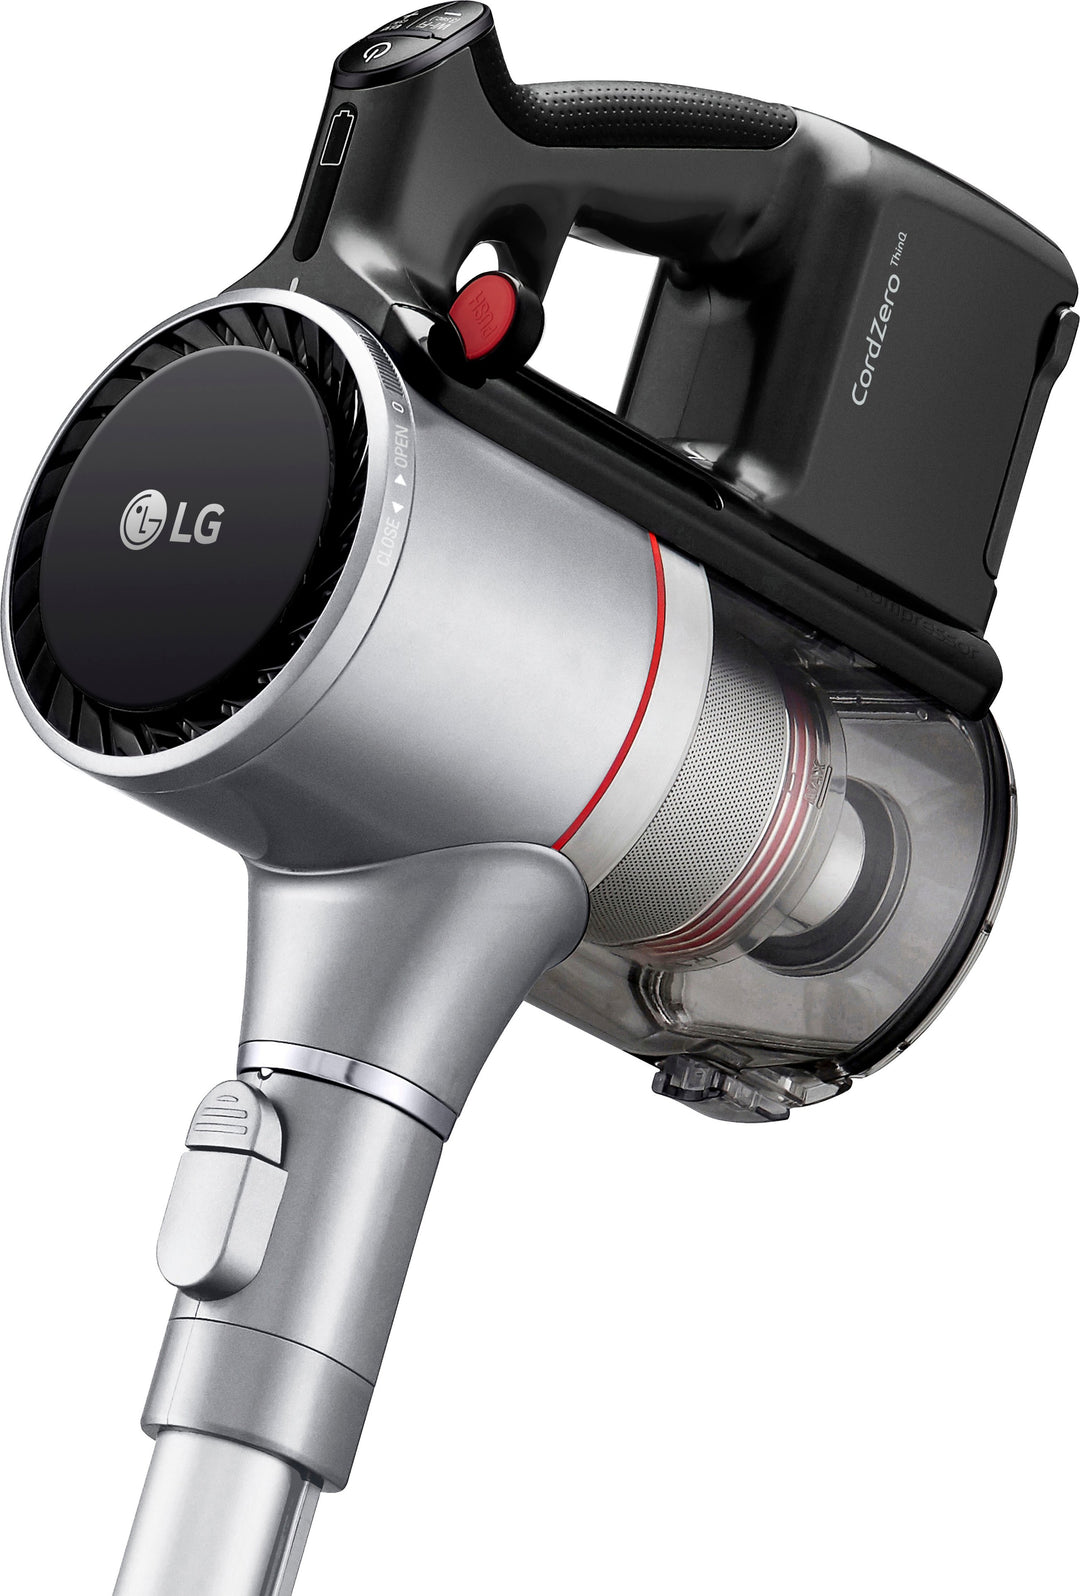 LG - CordZero Cordless Stick Vacuum with Kompressor technology - Matte Silver_16